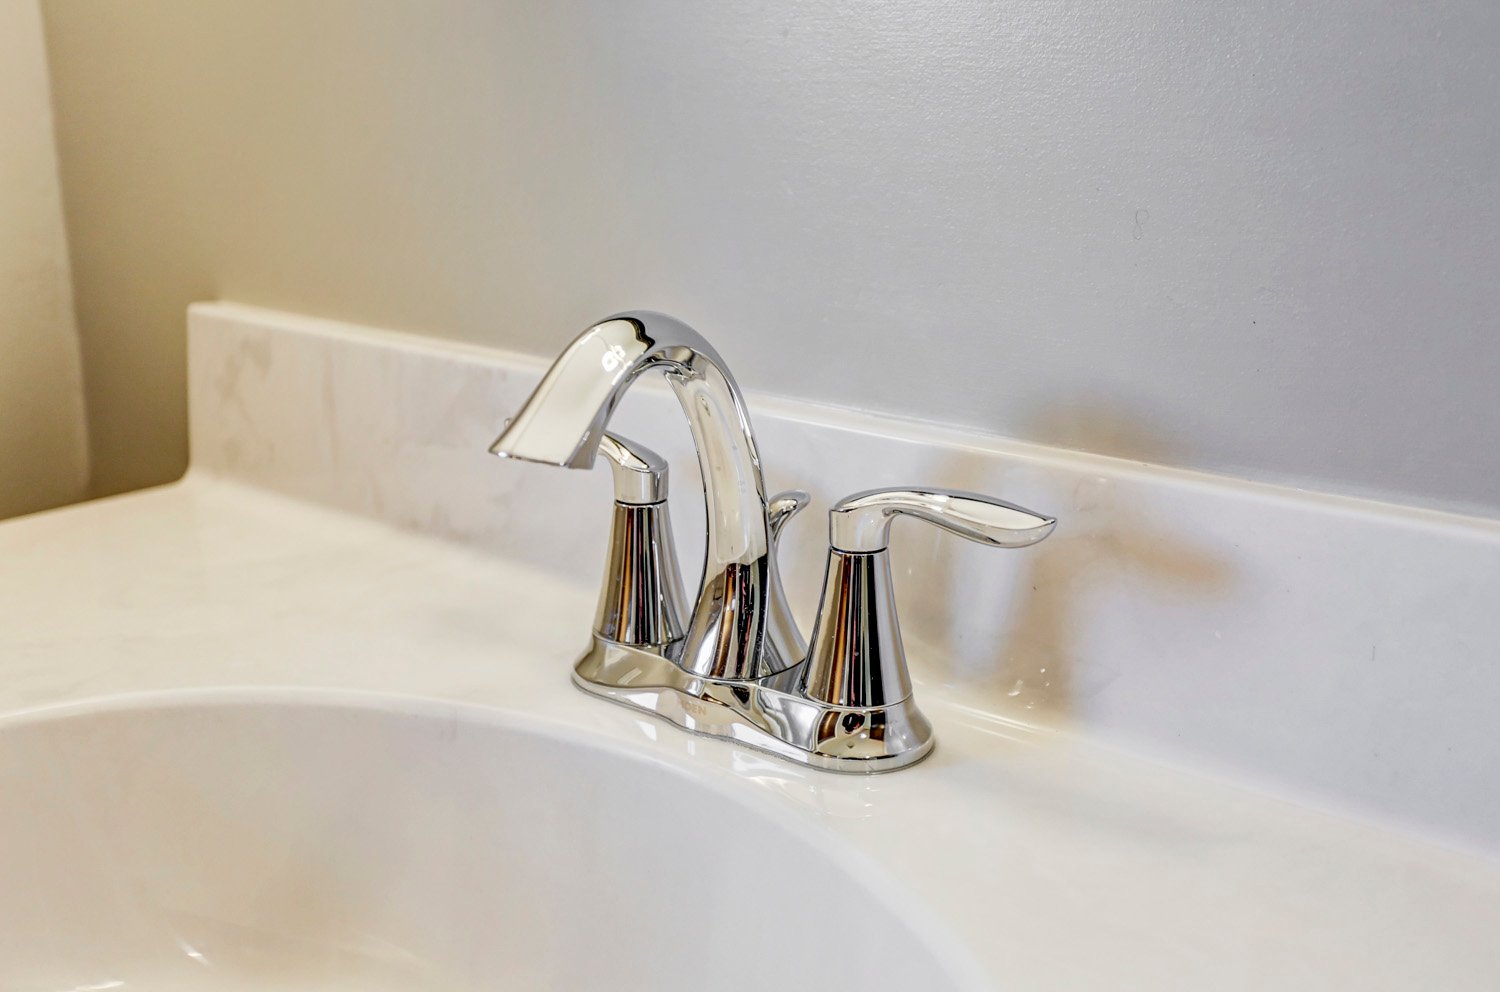 Chrome faucet in Manheim Township Bathroom Remodel